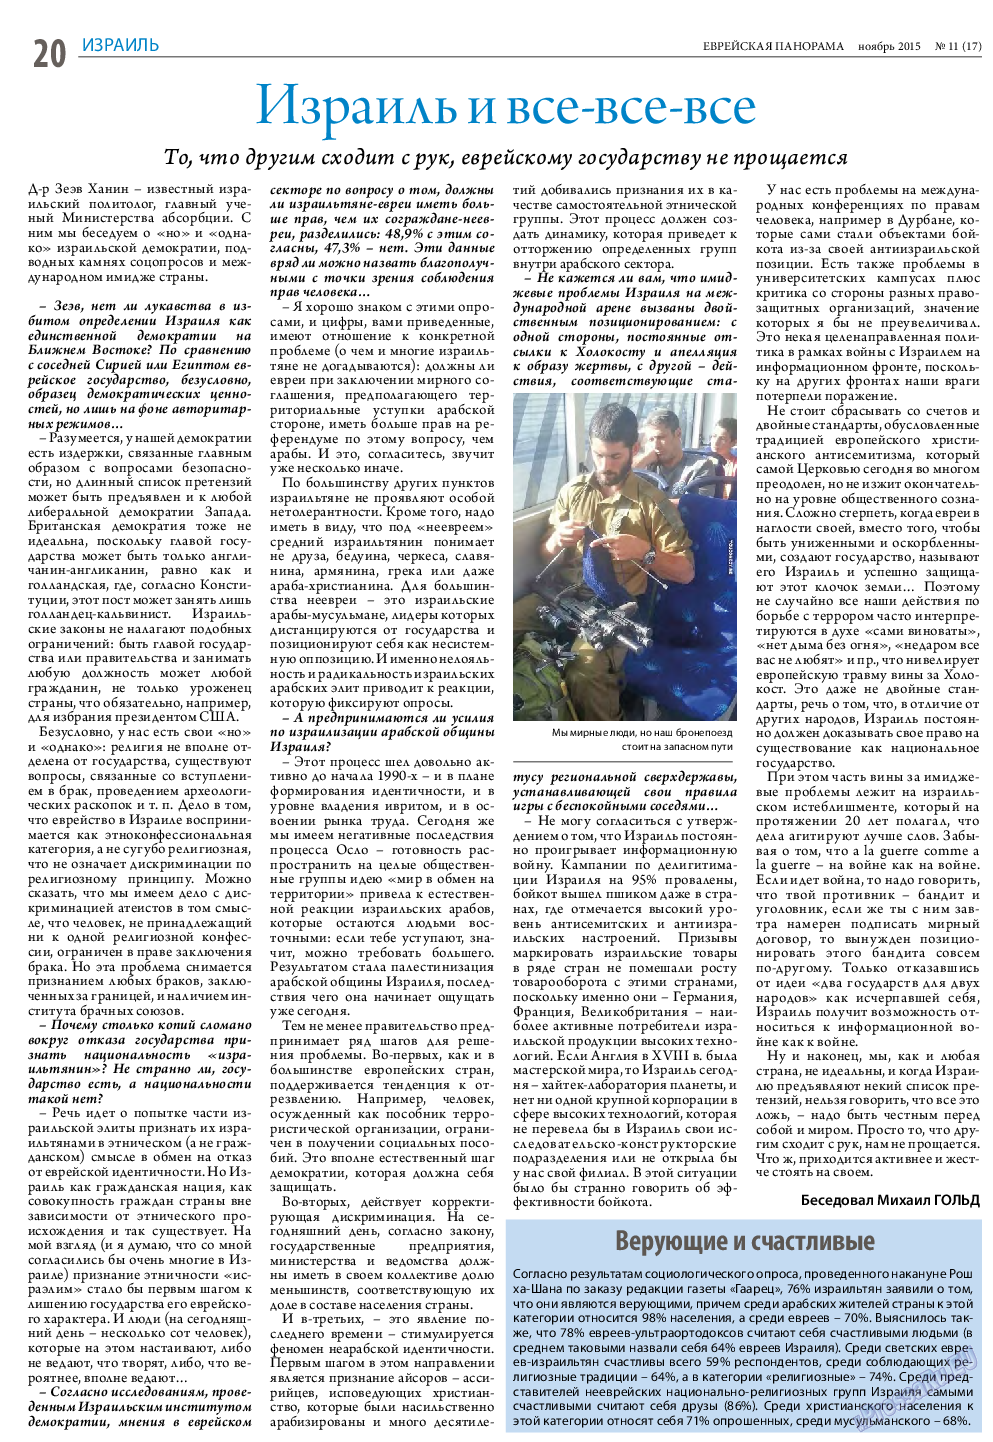 Еврейская панорама, газета. 2015 №11 стр.20